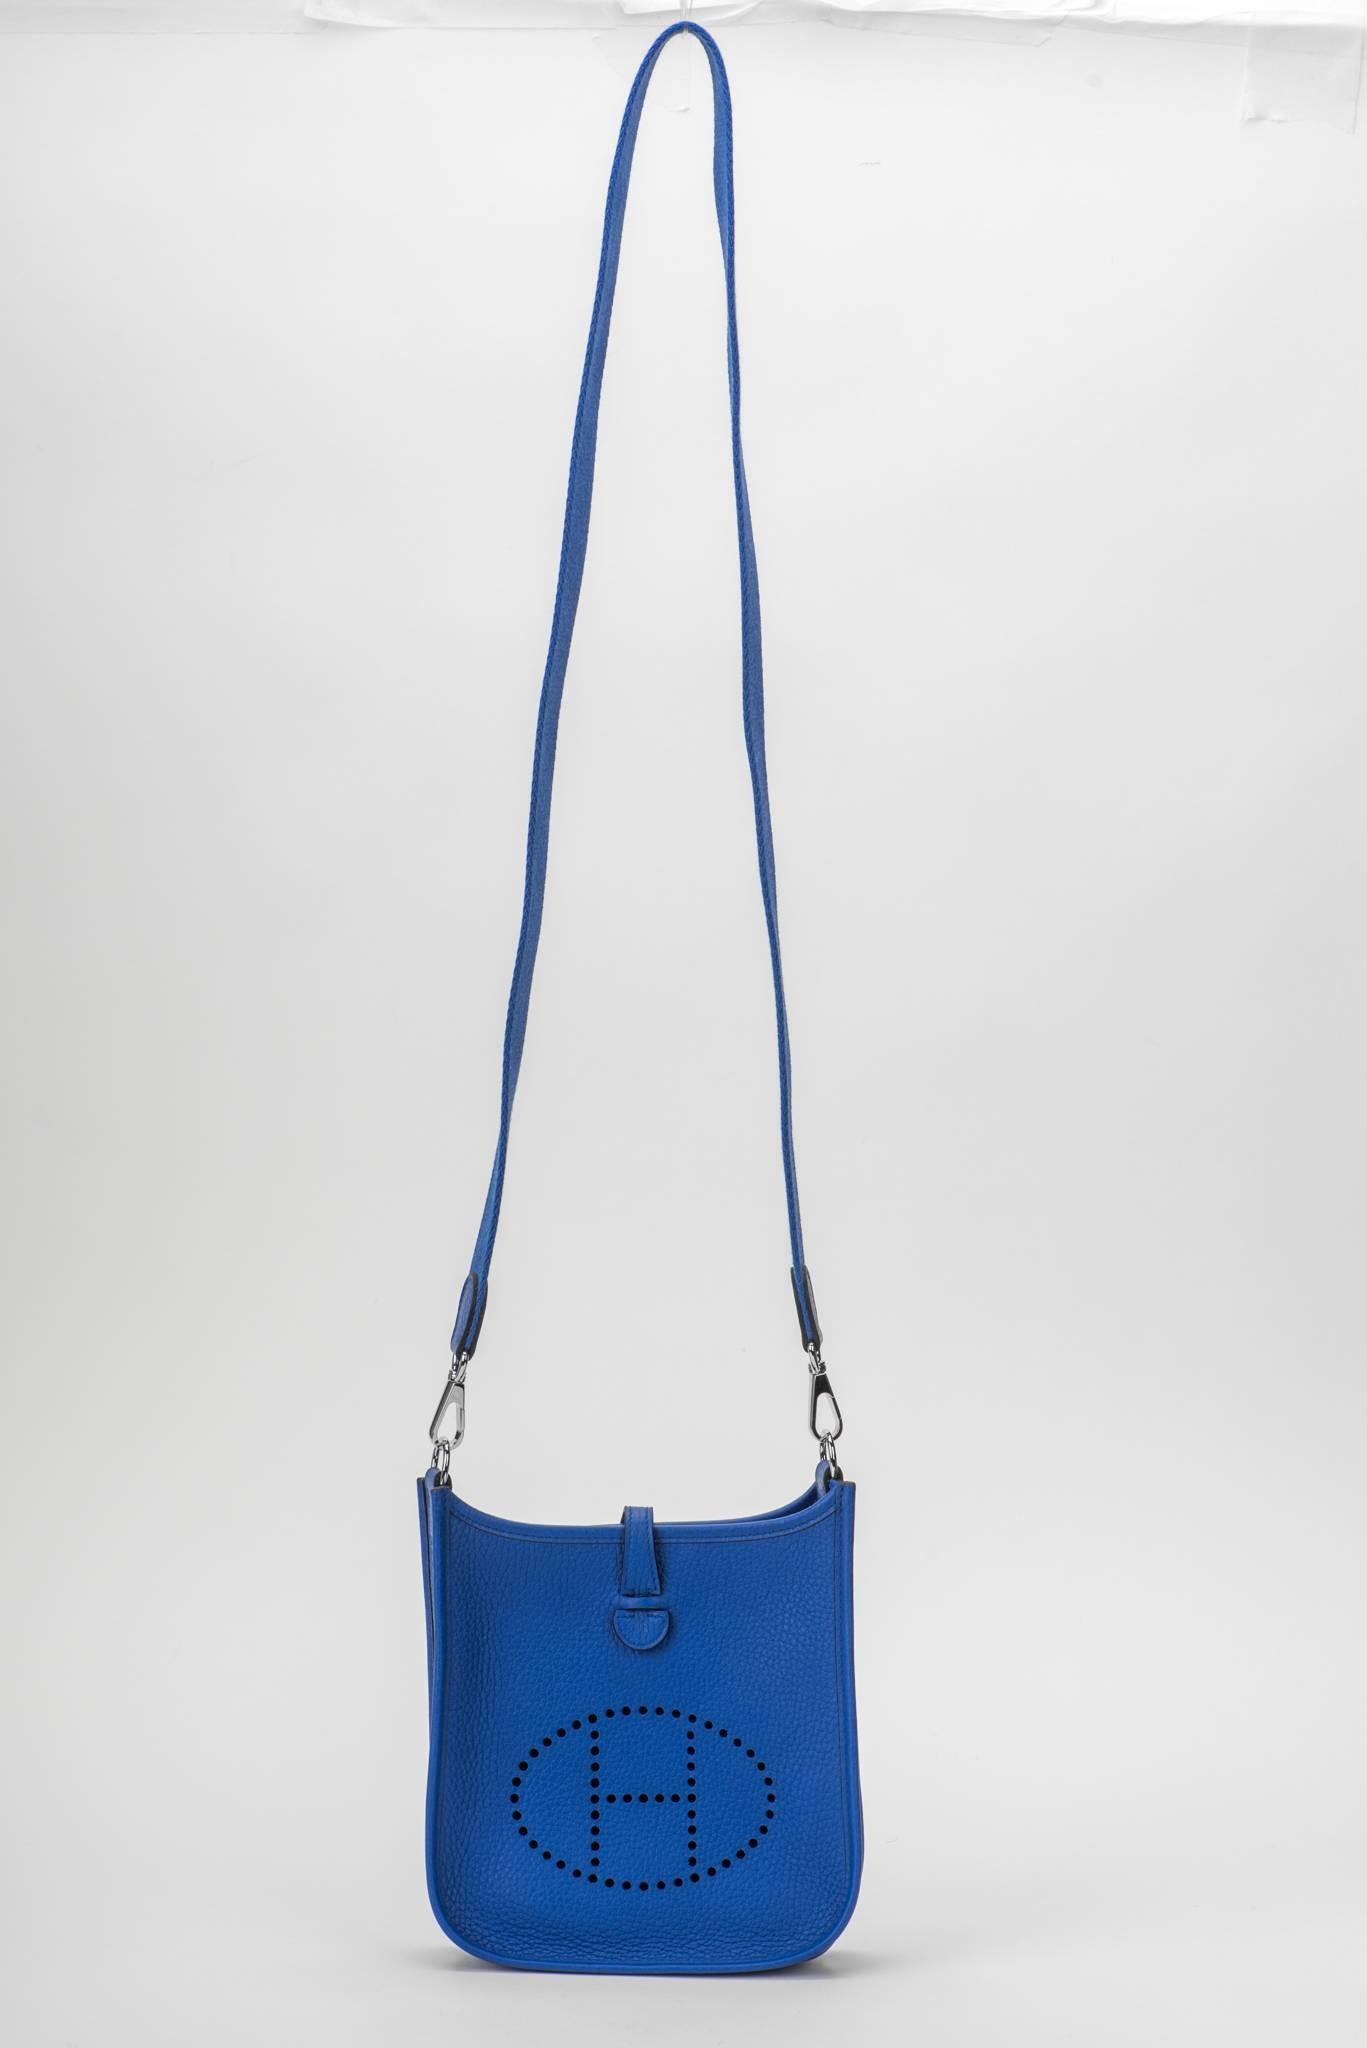 New in Box Hermes Electric Blue Mini Evelyne Crossbody Bag 6